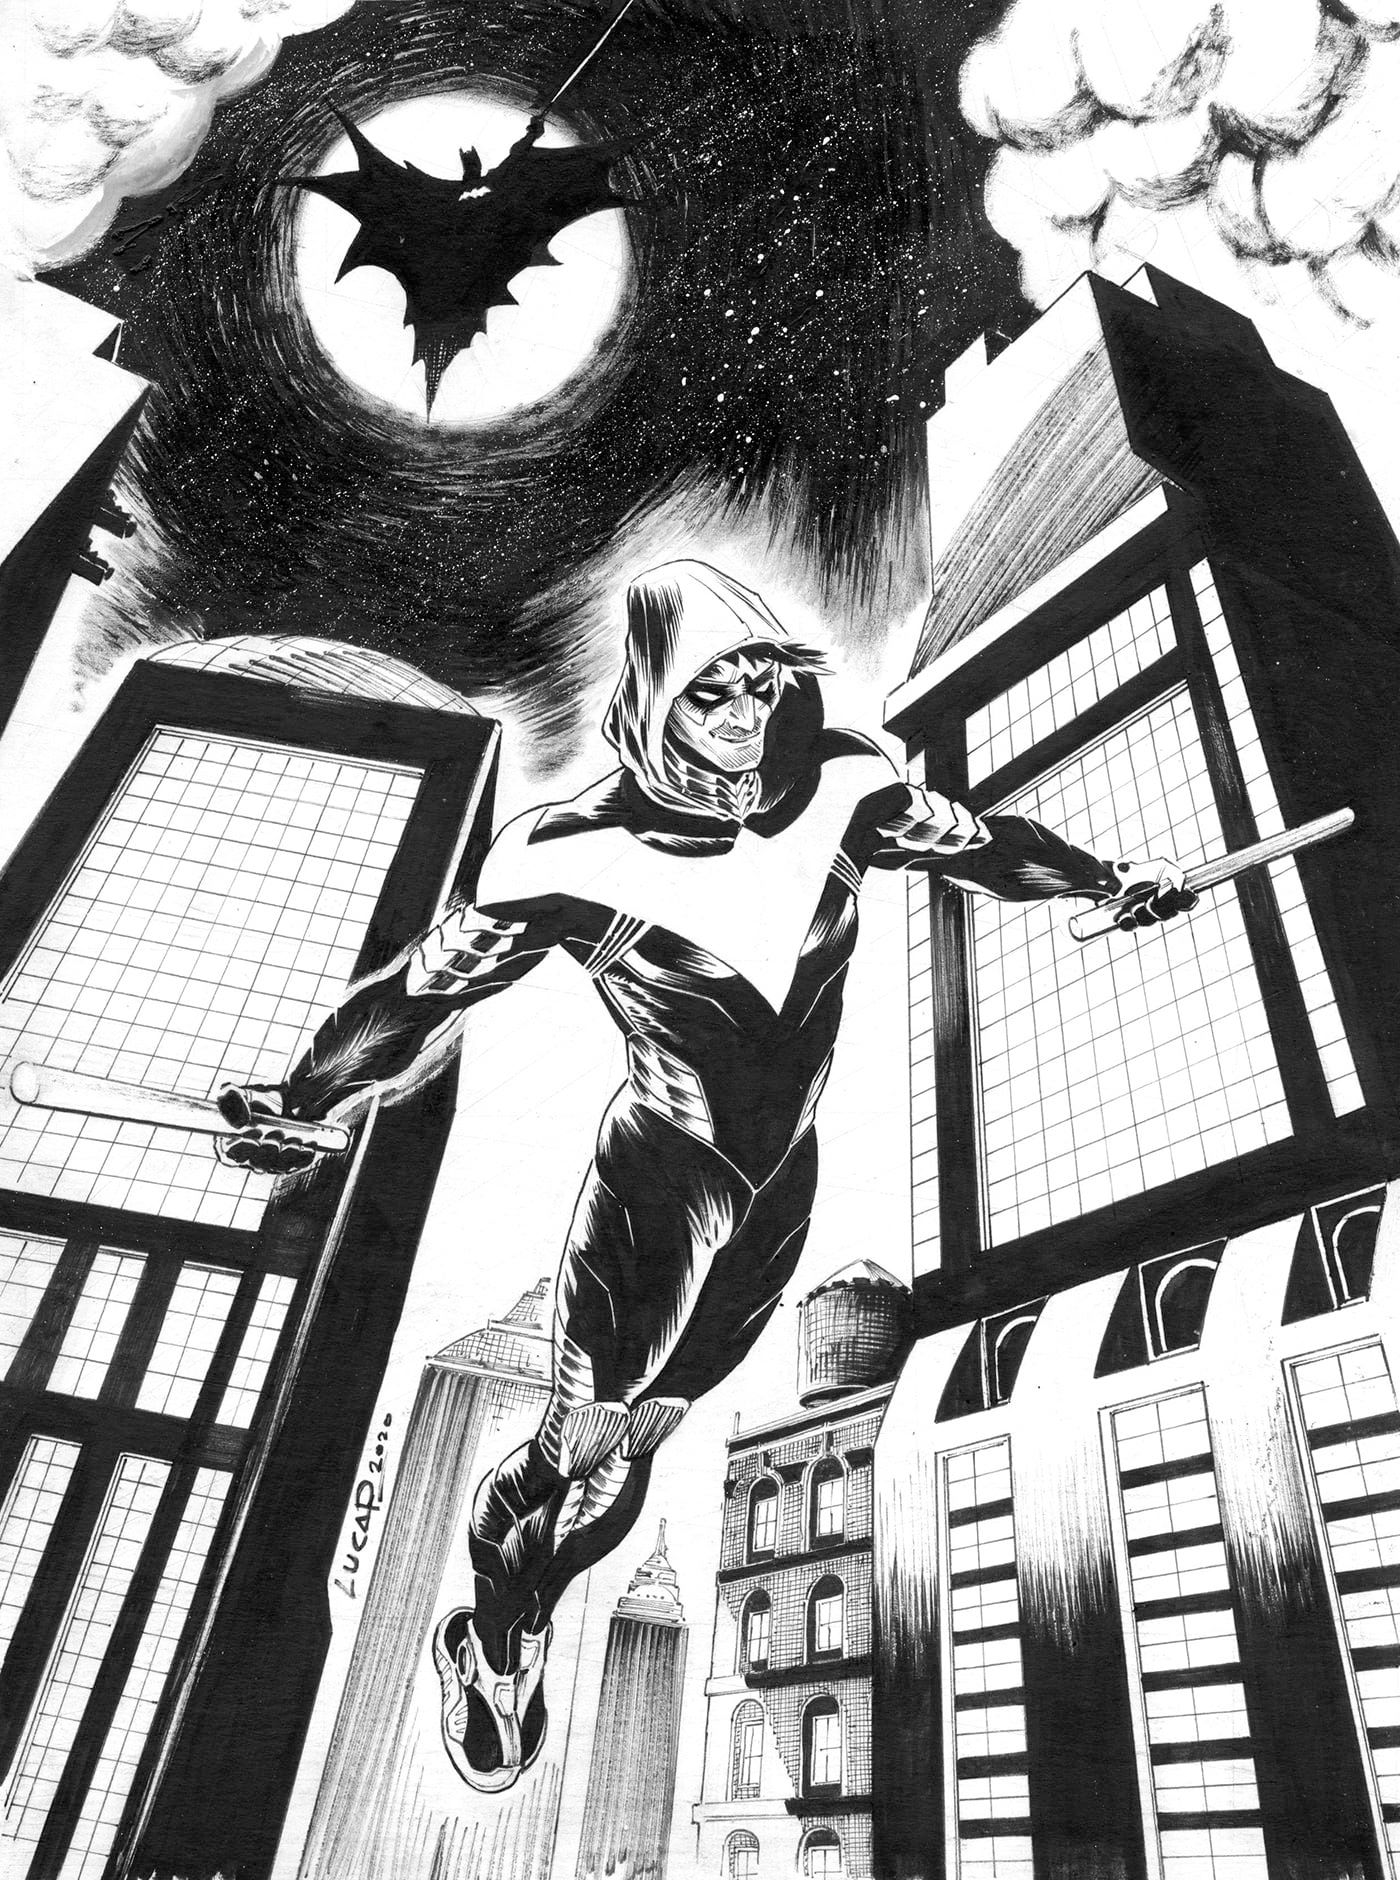 Nightwing Comic Art Wallpapers